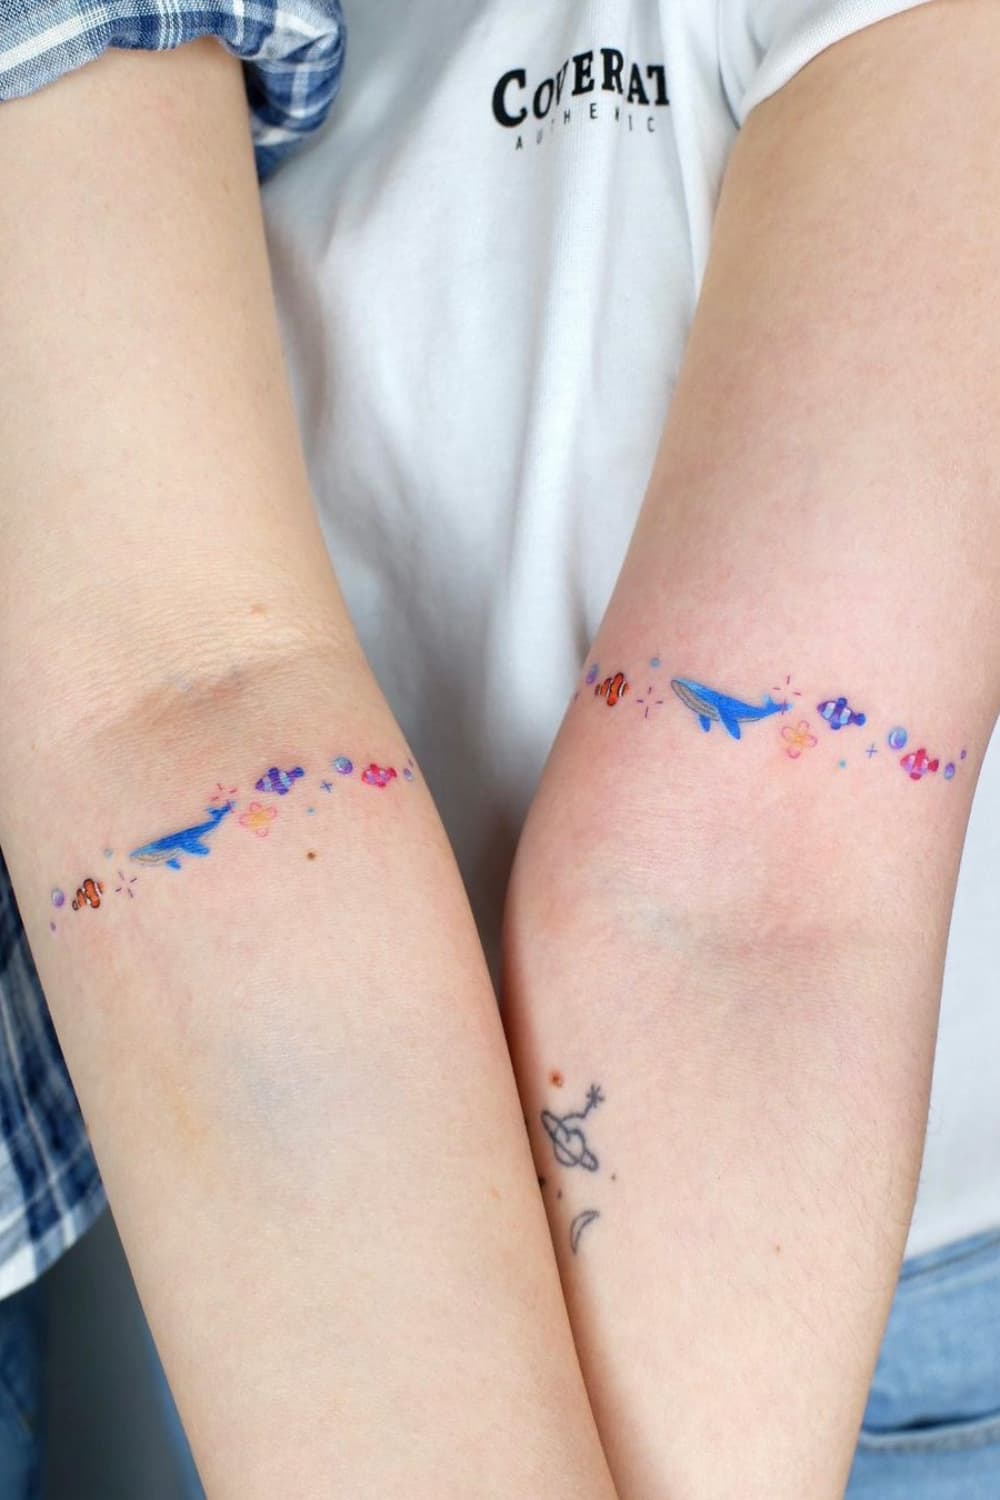 Arm Band Matching Tattoo